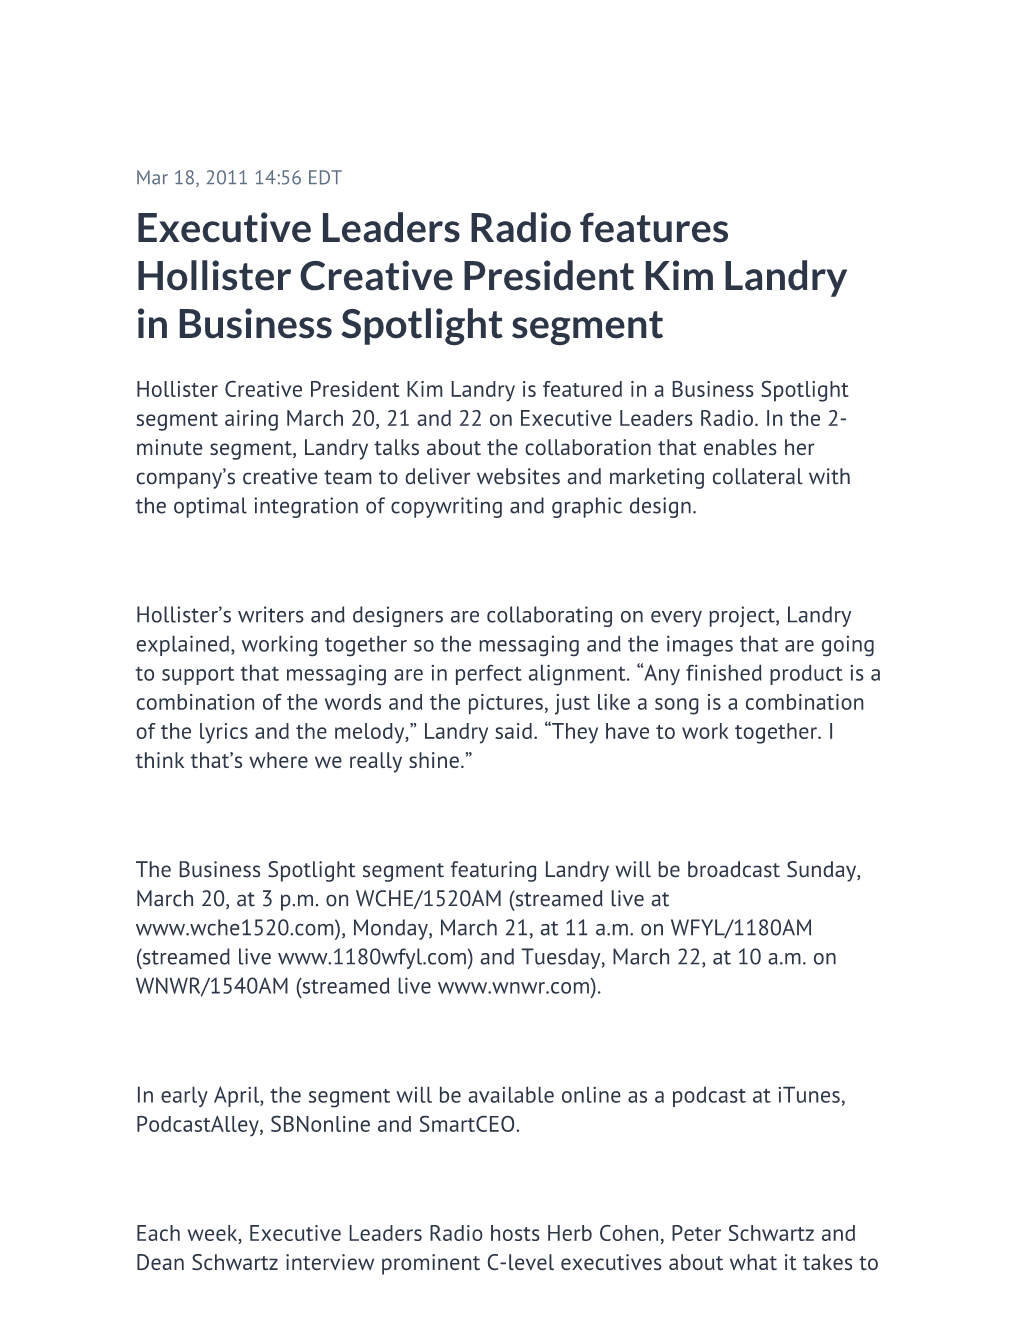 Executive Leaders Radio Features Hollister Creative President Kim Landry in Business Spotlight Segment